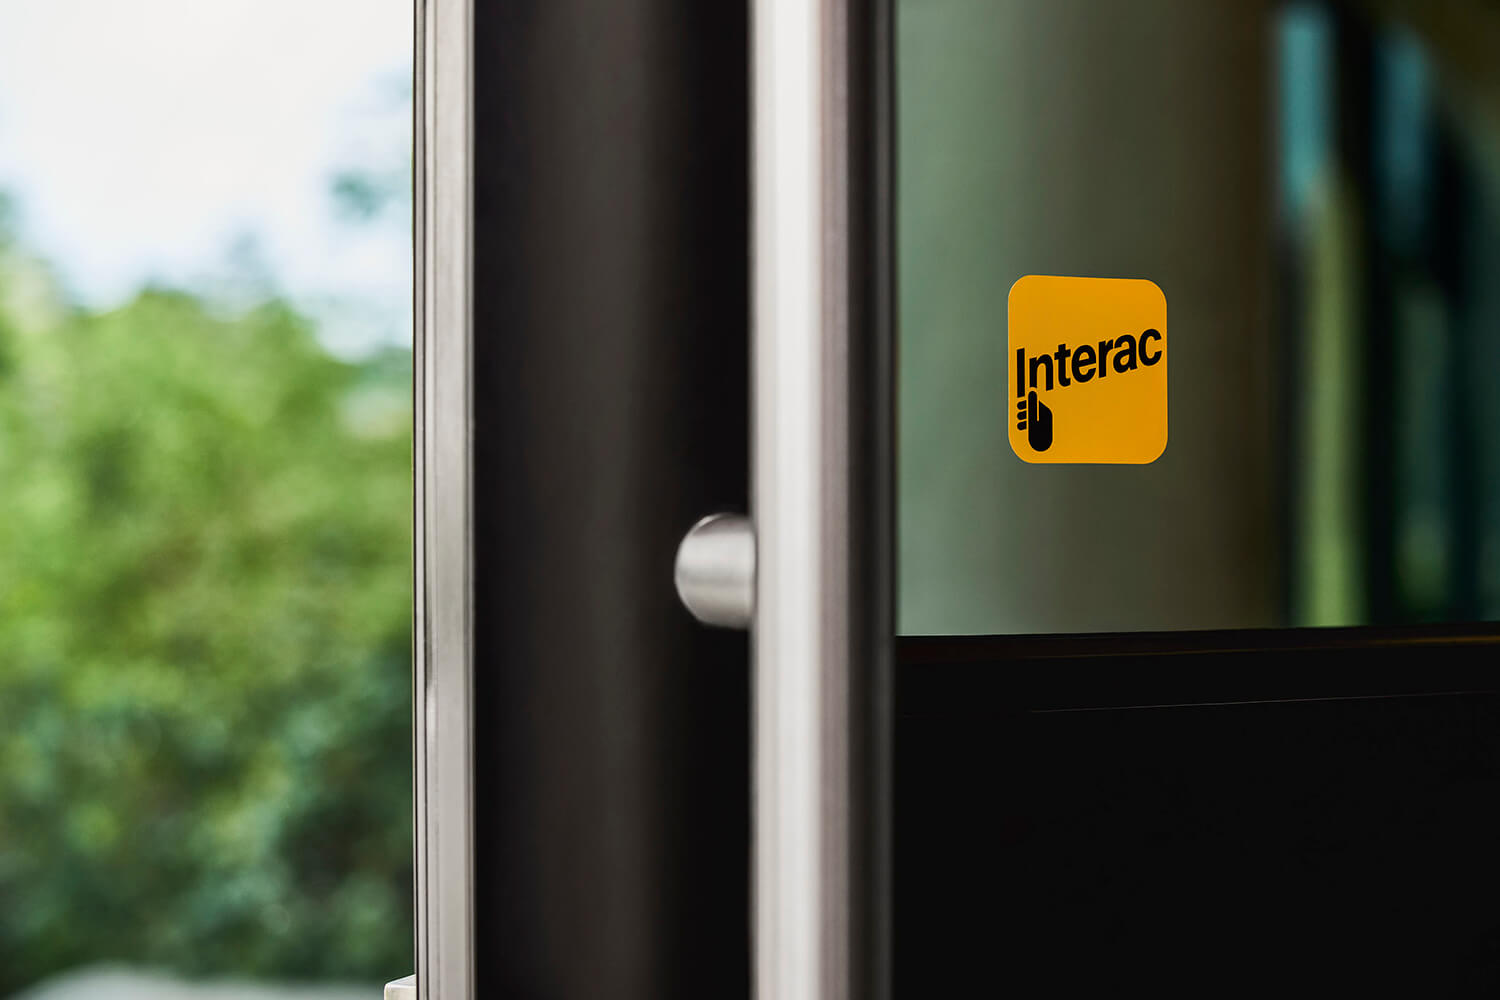 Interac logo on door